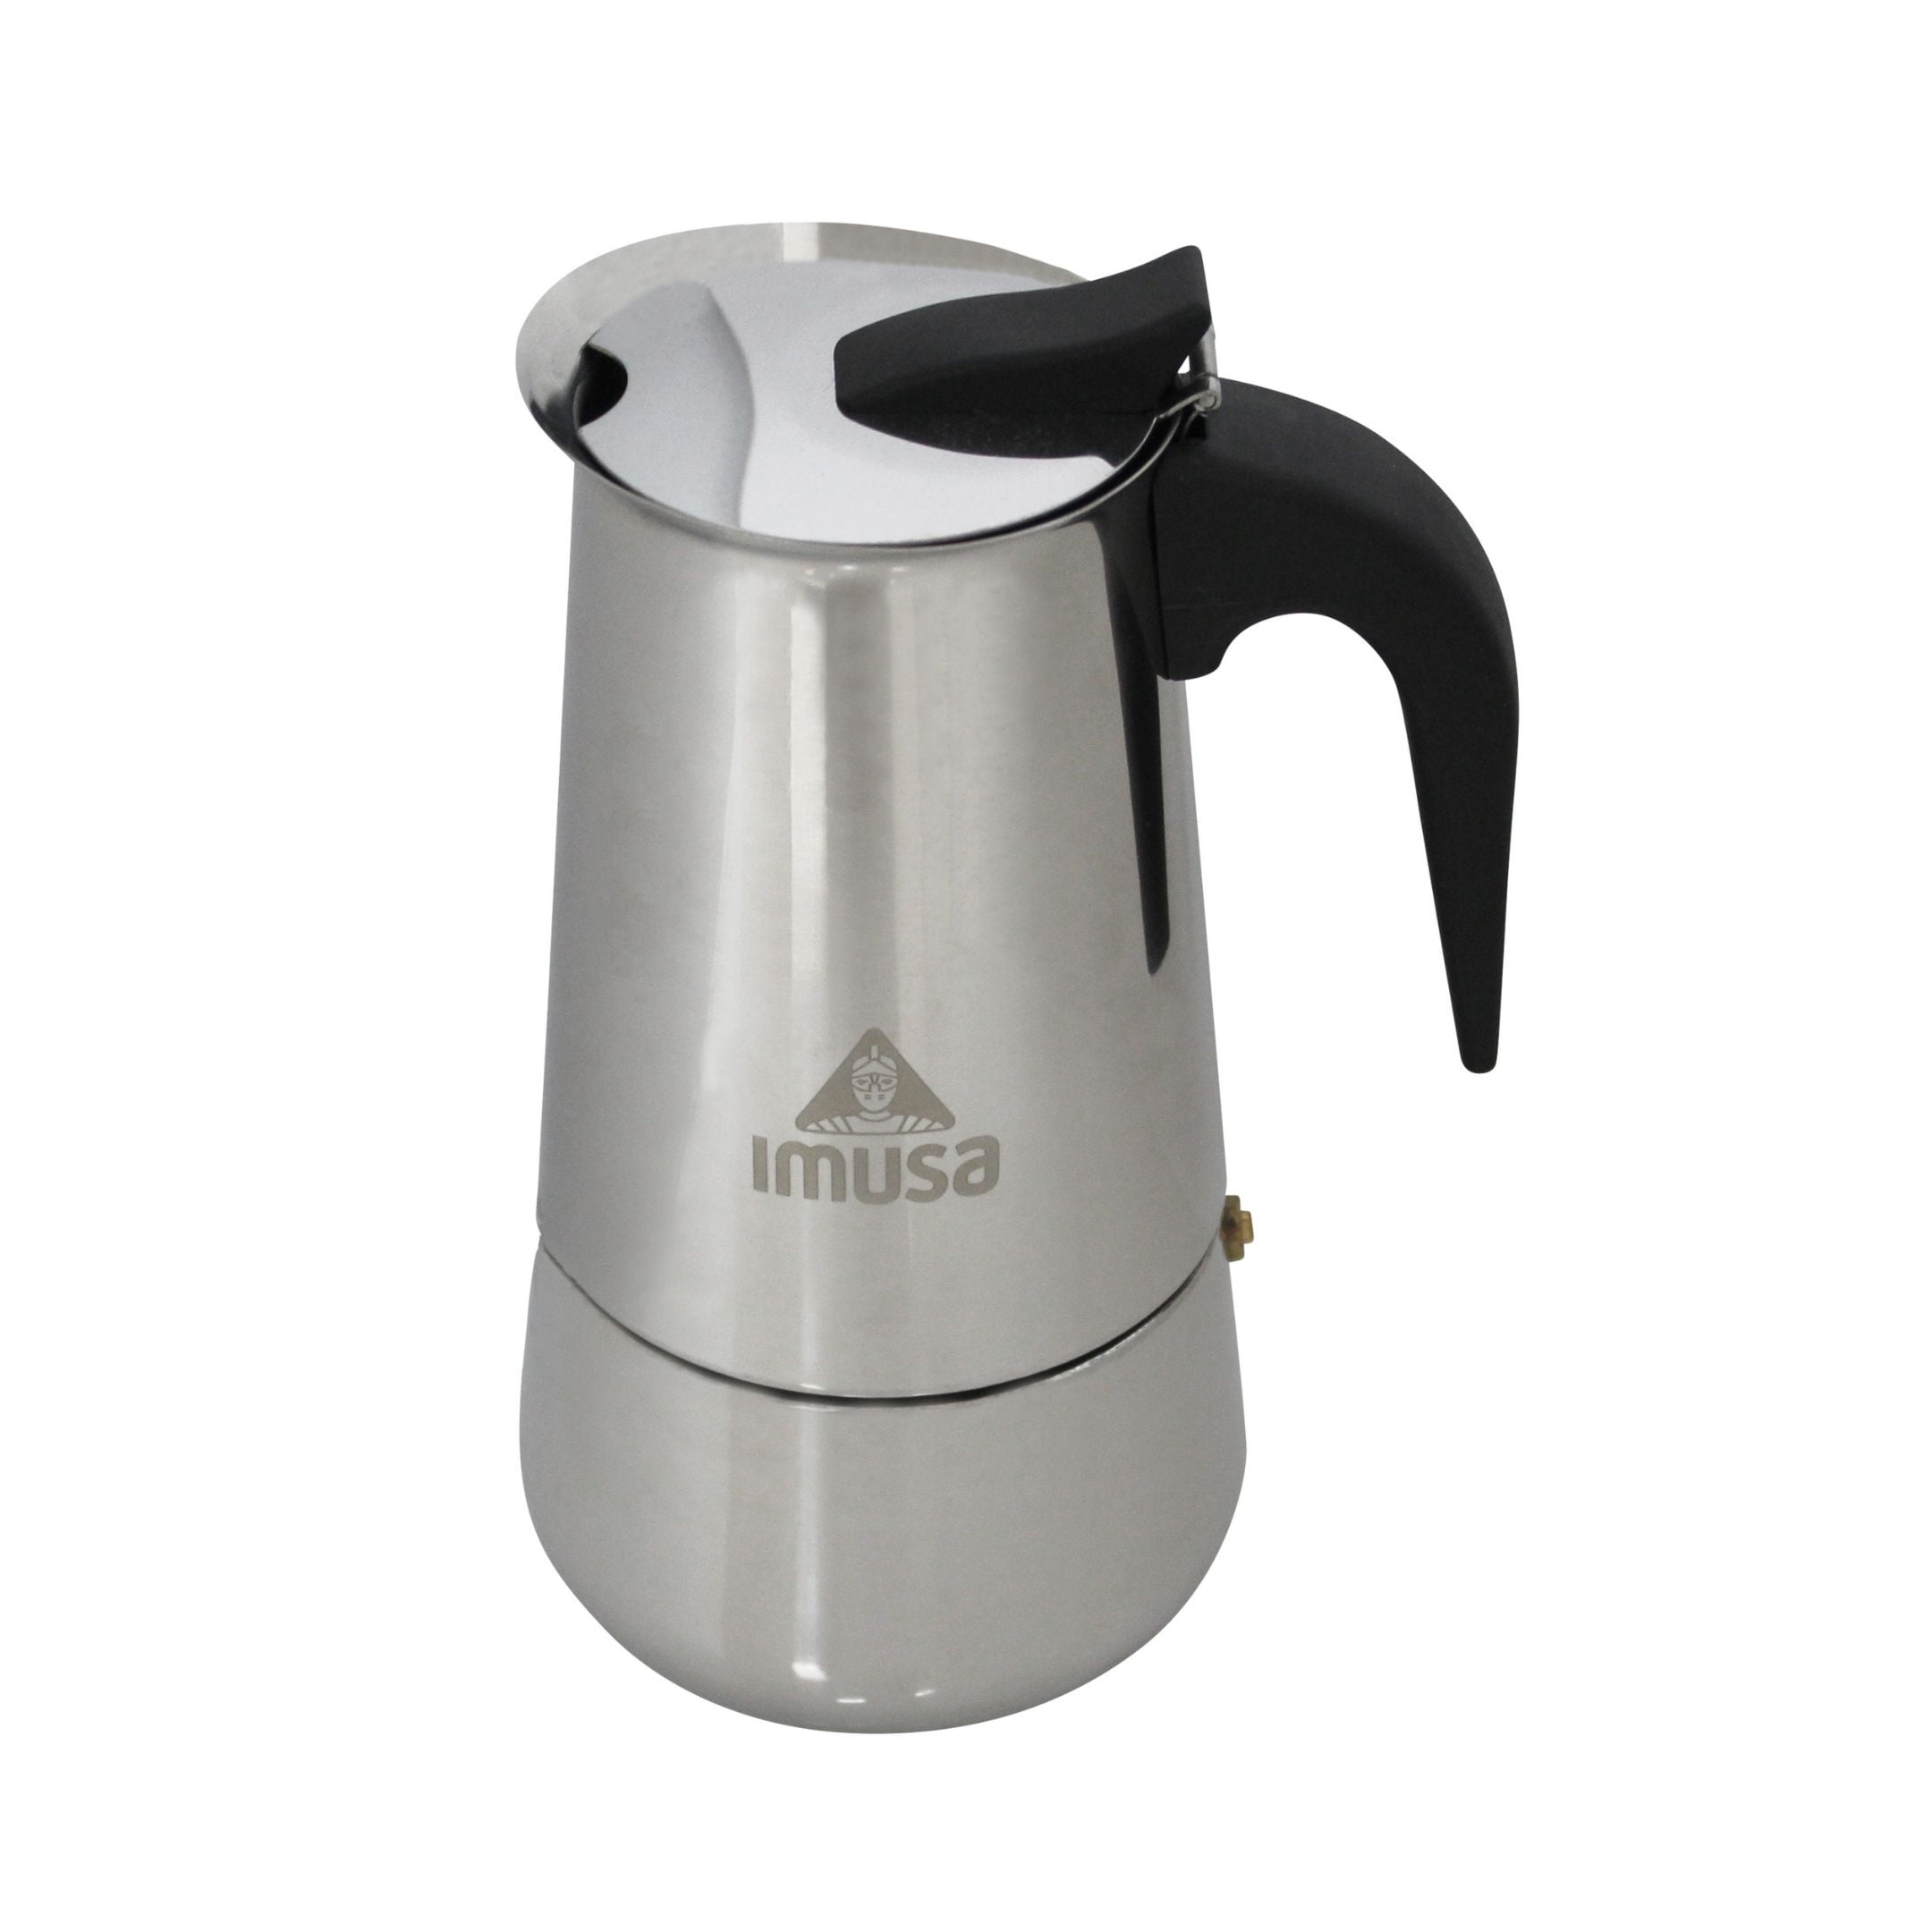 Mr. Coffee 6-Cup Traditional Stove Top Espresso Maker